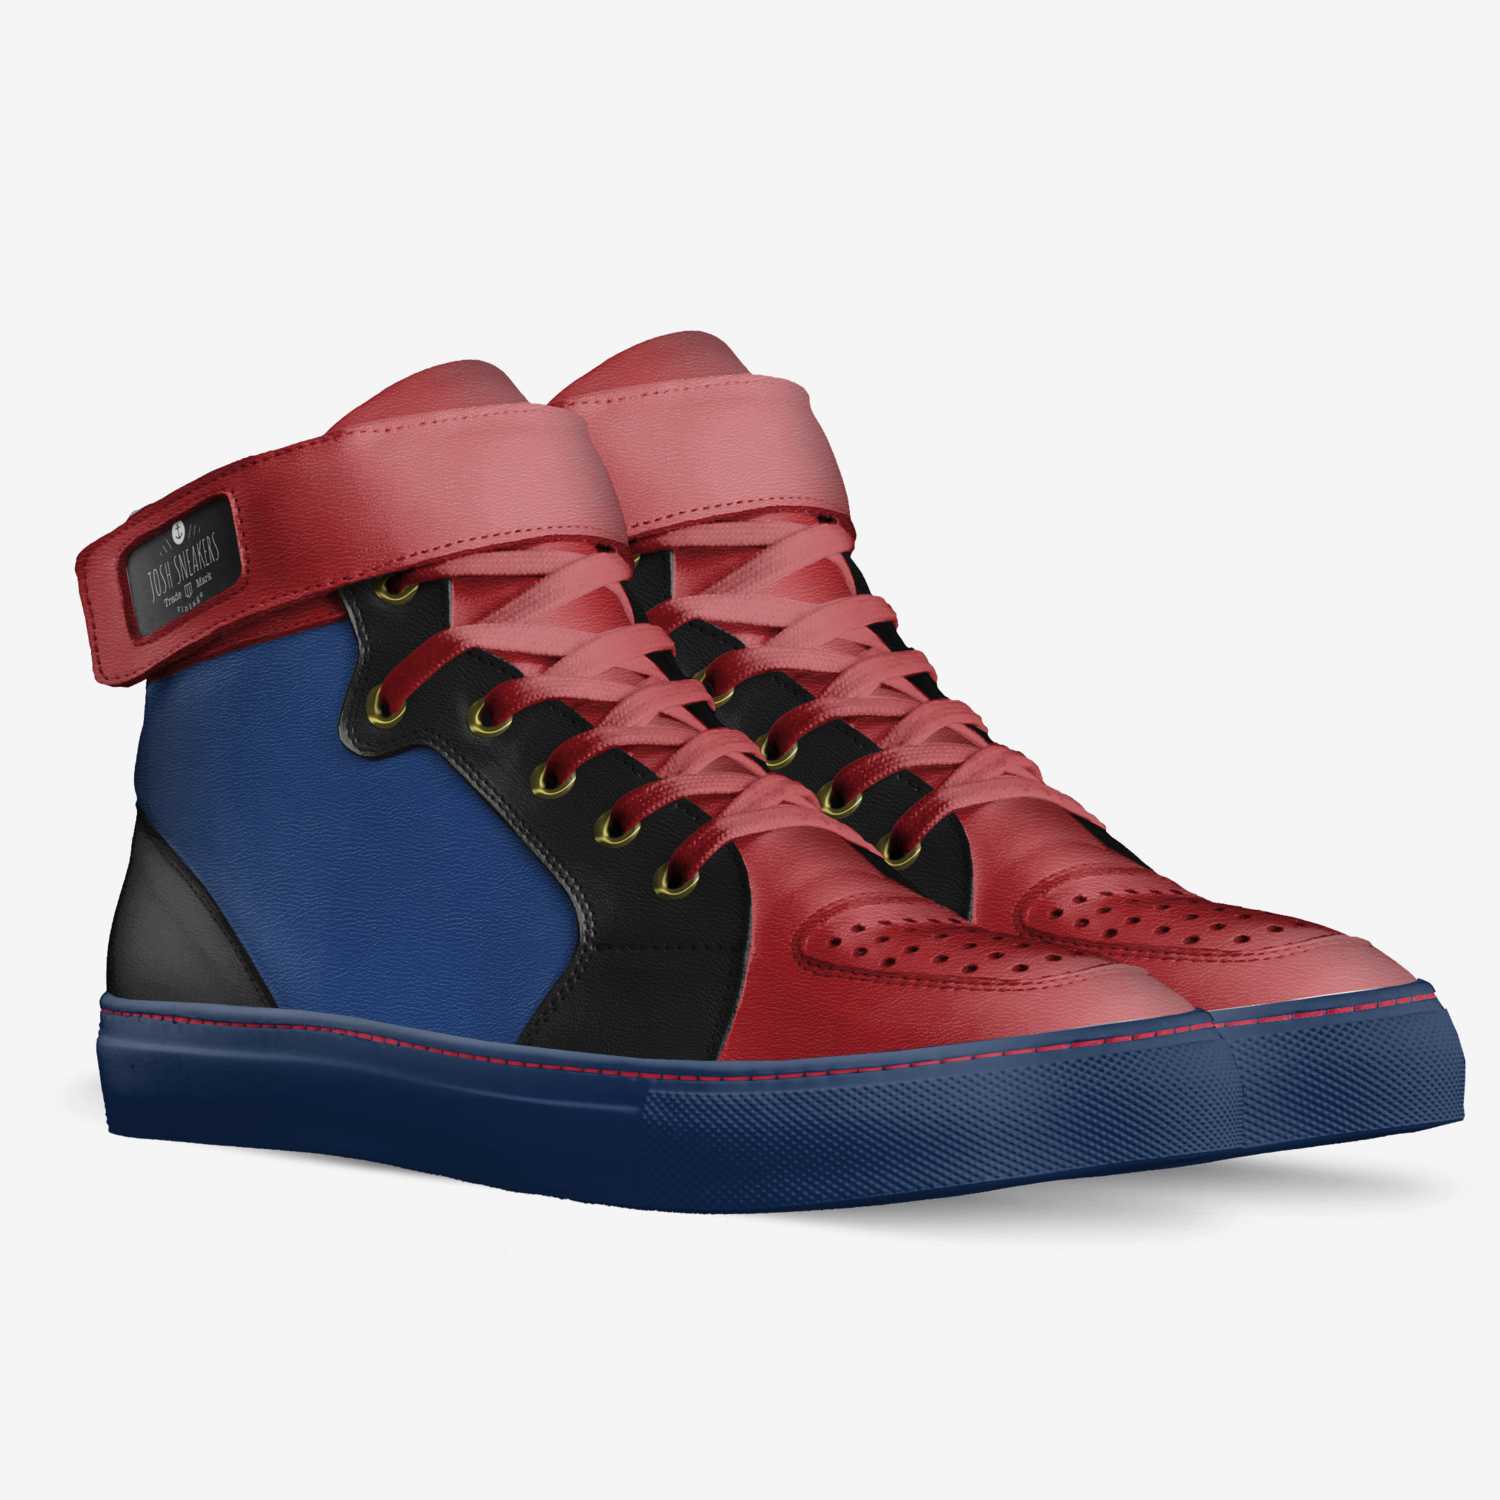 Josh sneakers | A Custom Shoe concept by Josh Bundy